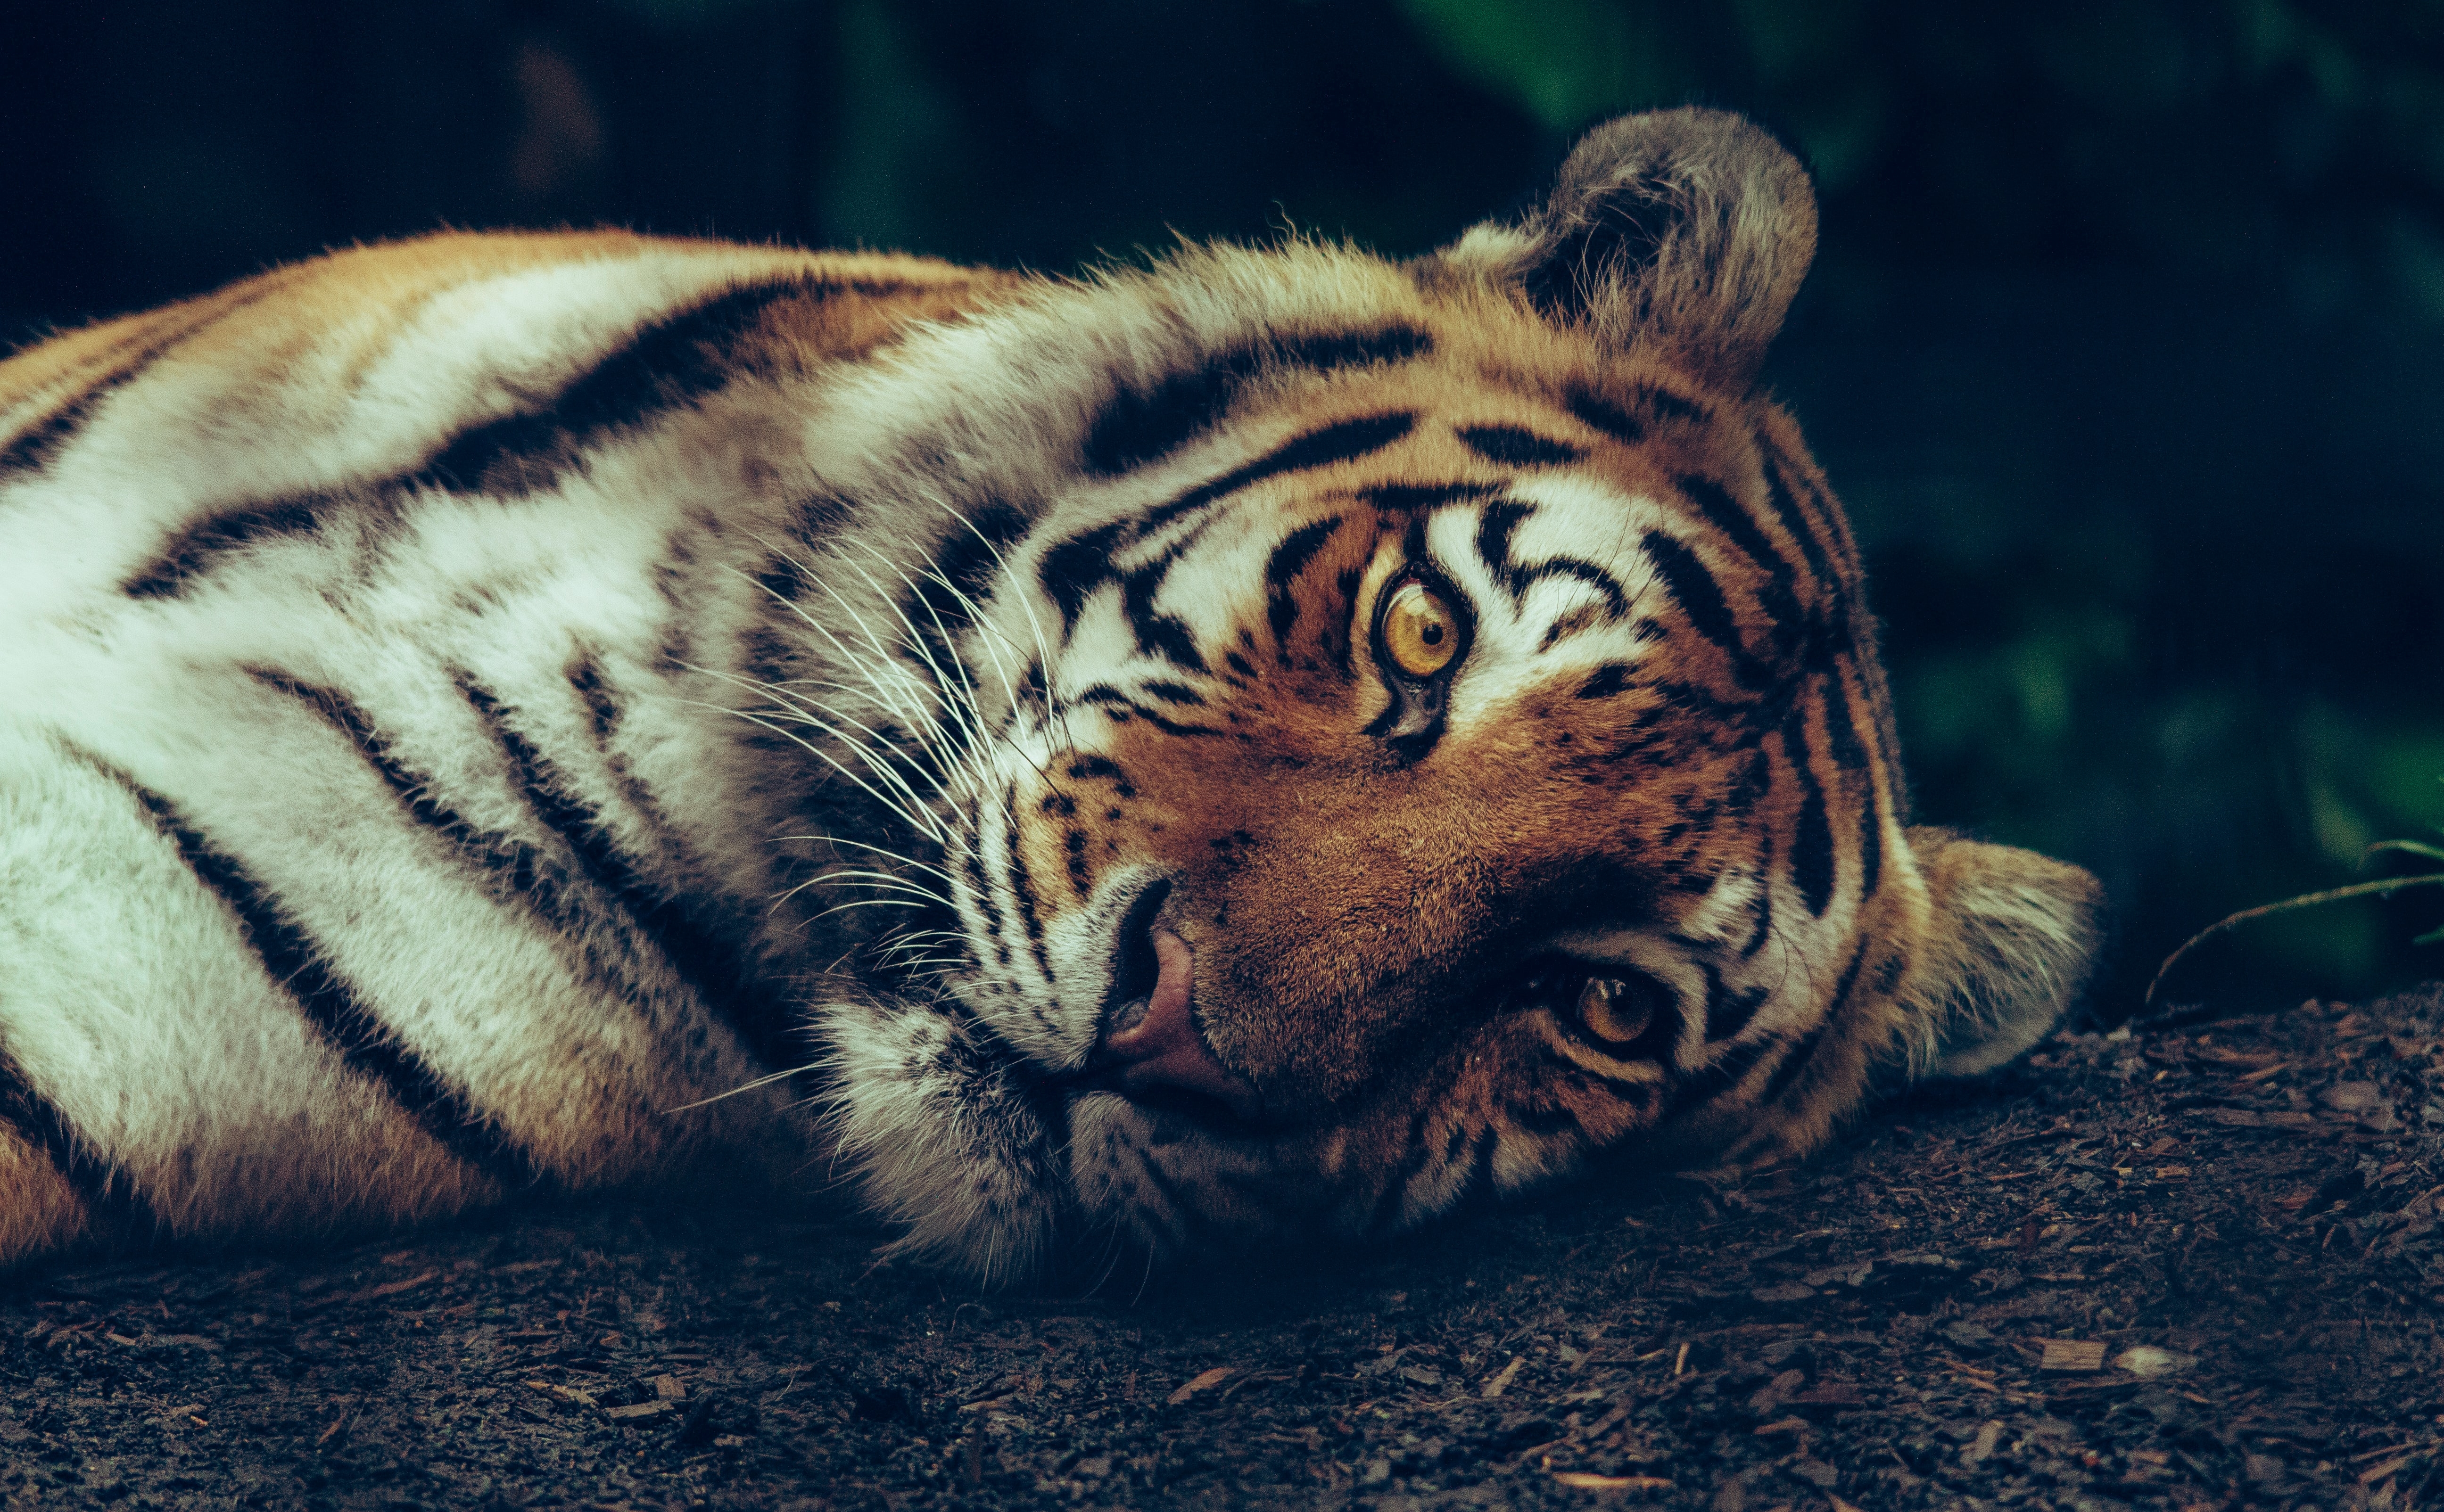 HD wallpaper, Wild Animal, Closeup Photography, 5K, Big Cat, Selective Focus, Staring, Carnivore, Siberian Tiger, Predator